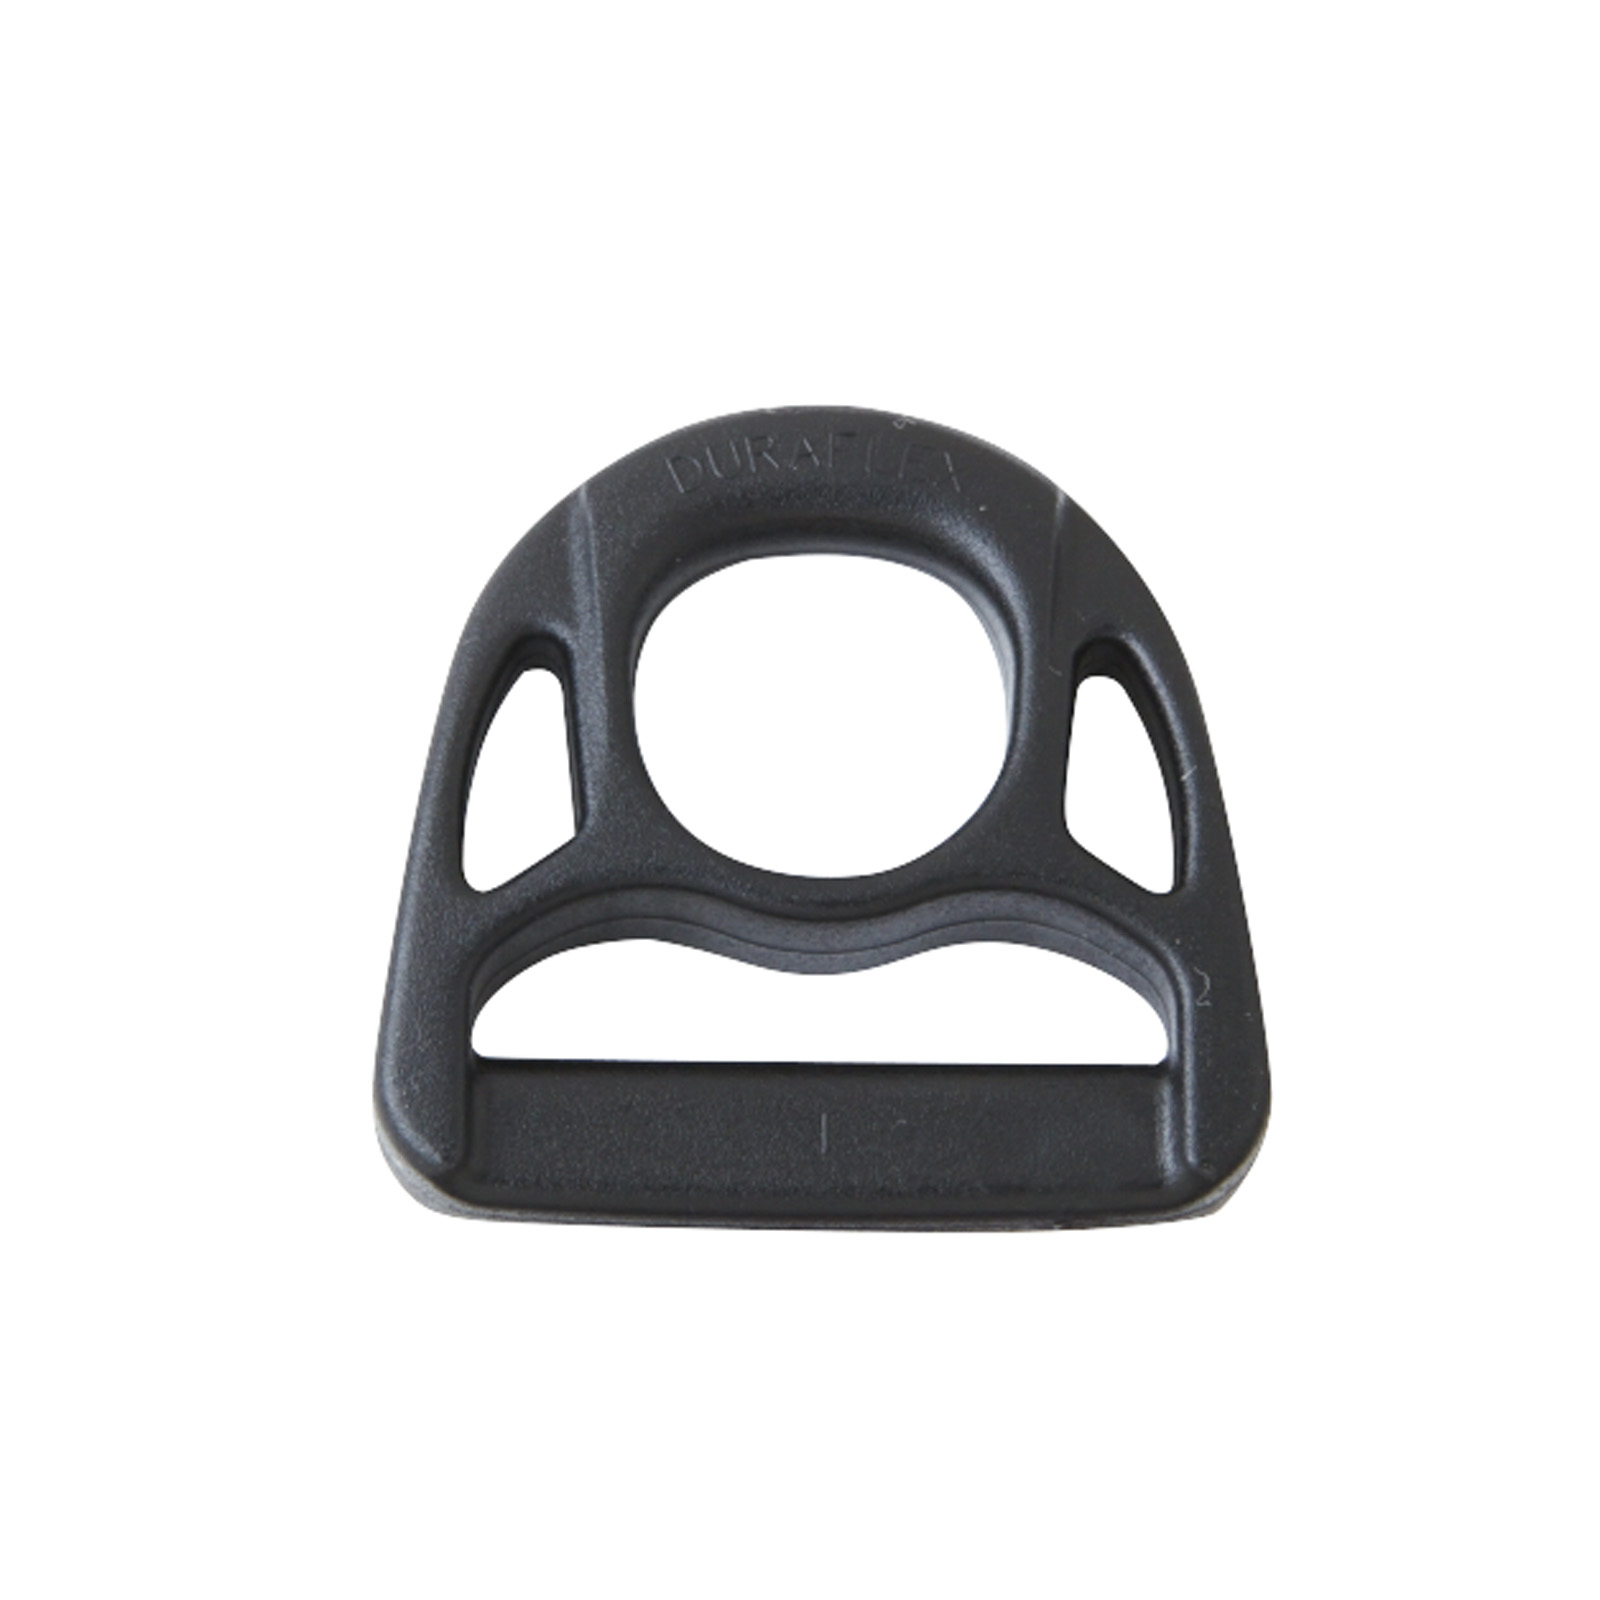 Plastic D-ring 25 mm black 300 pcs - D rings - SHOP - beracedog